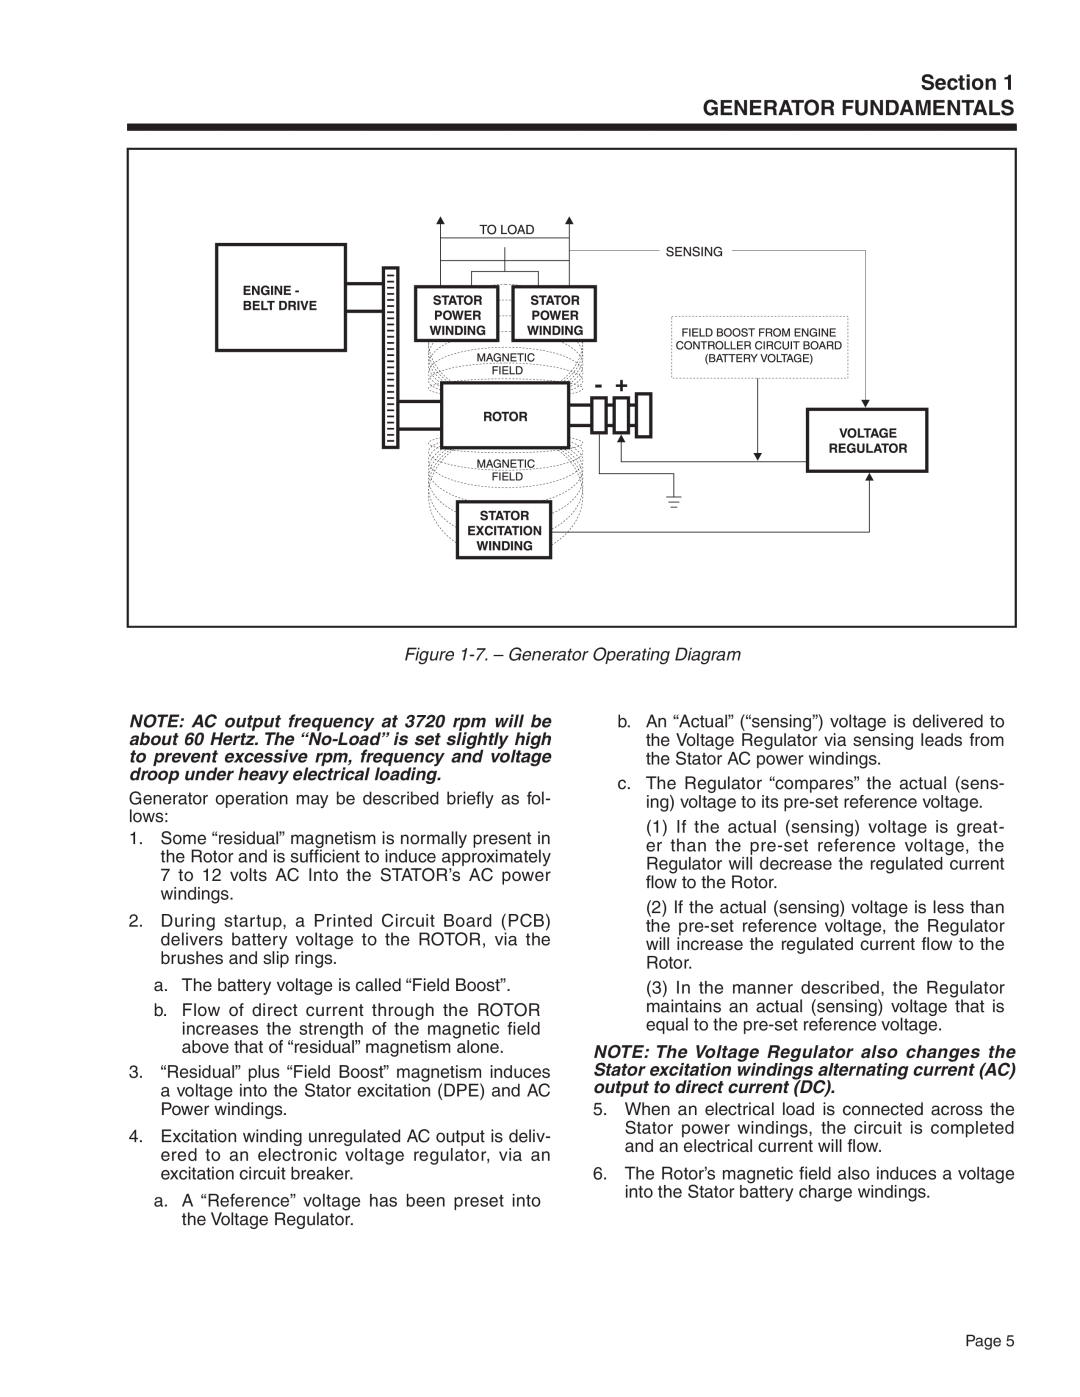 Generac Power Systems 5411, 5412, 5413, 5415, 5414, 5410 manual 7. - Generator Operating Diagram, Section GENERATOR FUNDAMENTALS 